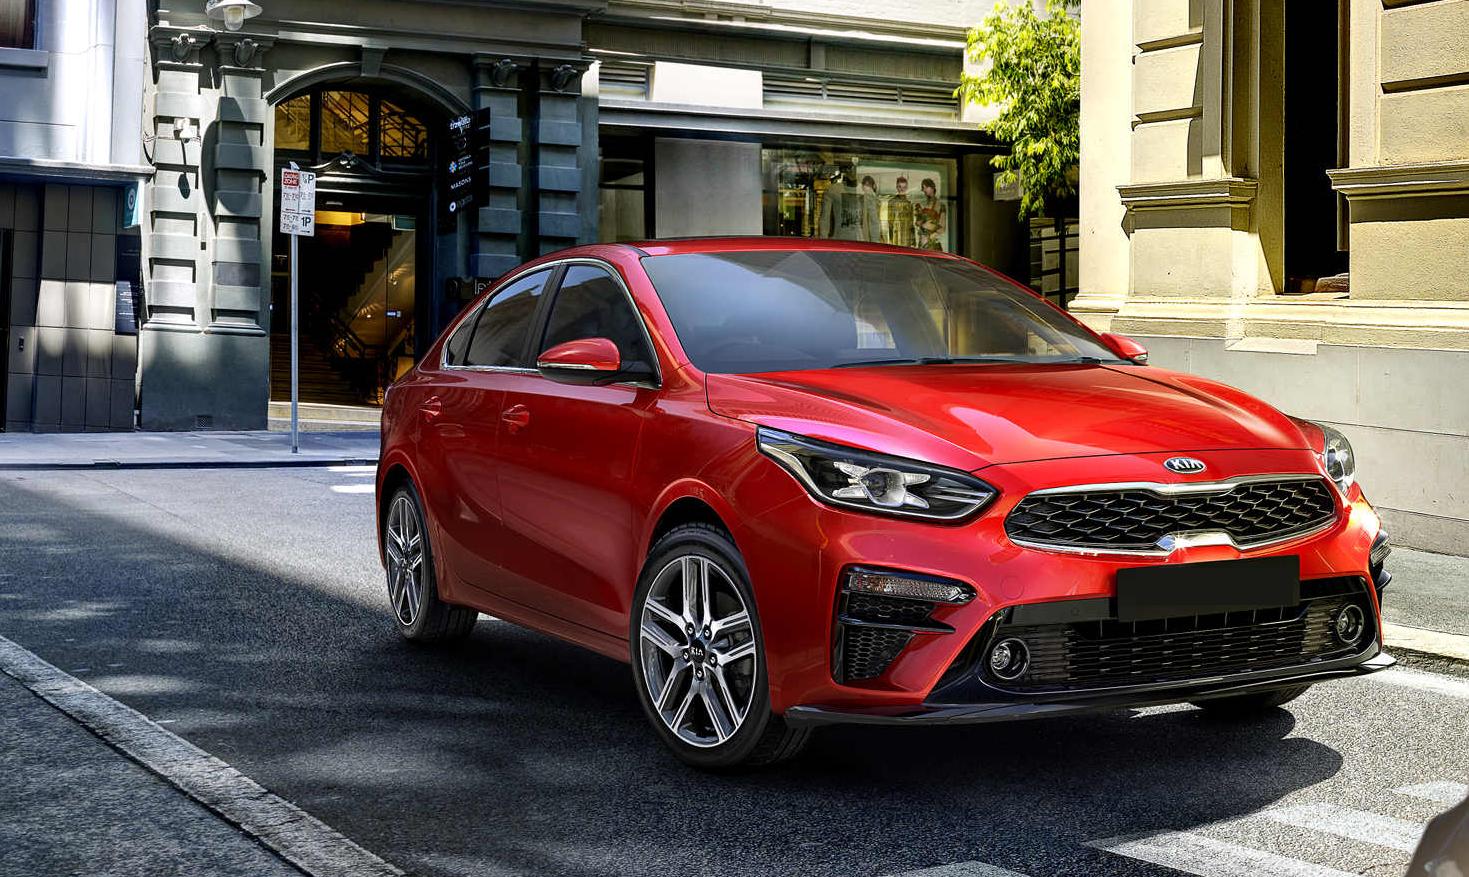 Focus on: The new 2018 Kia Cerato sedan. - Dowling's Automotive Buyers ...